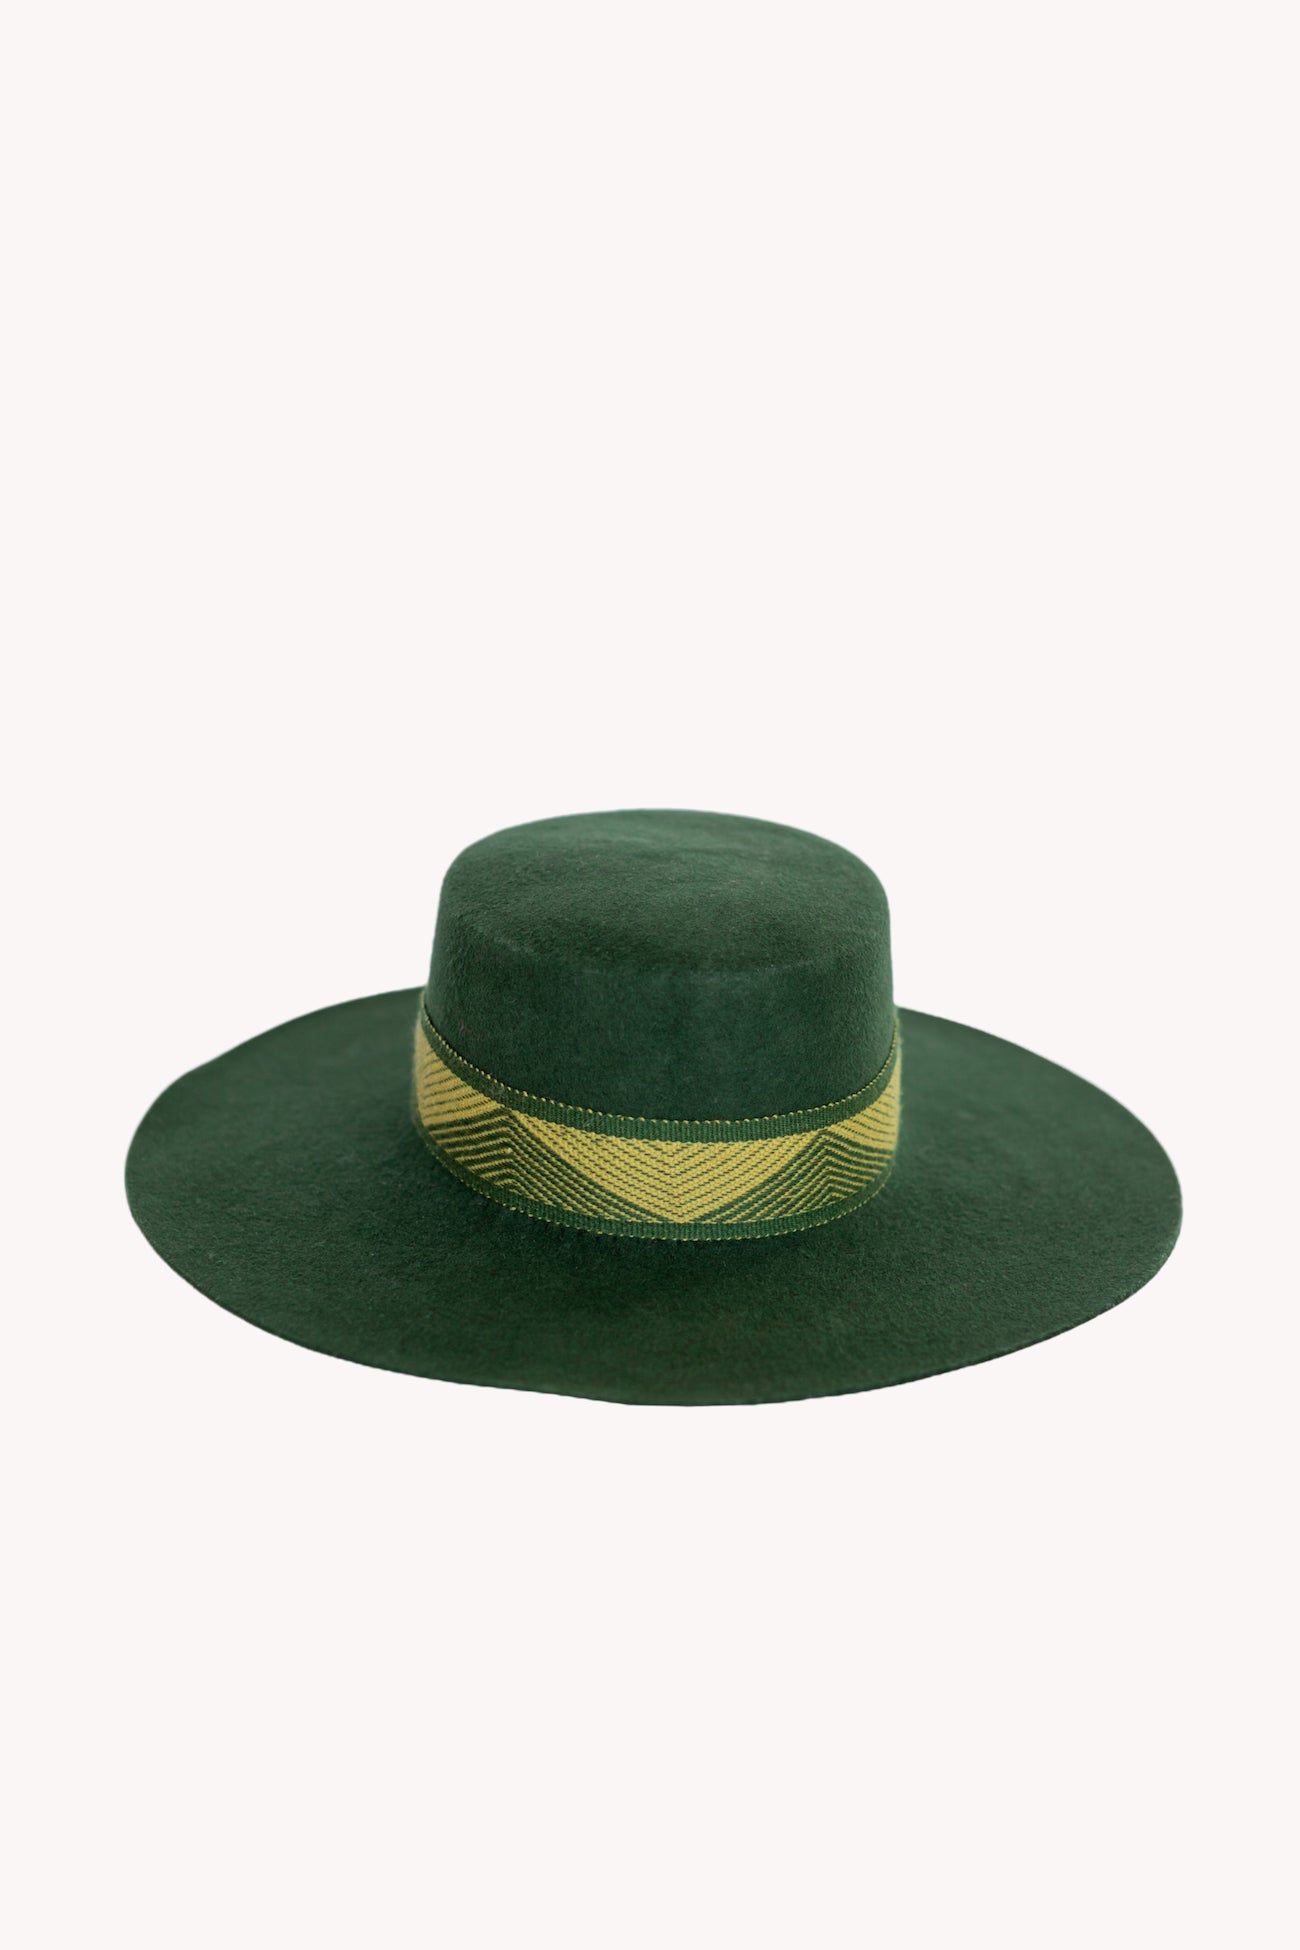 green Spanish style hat